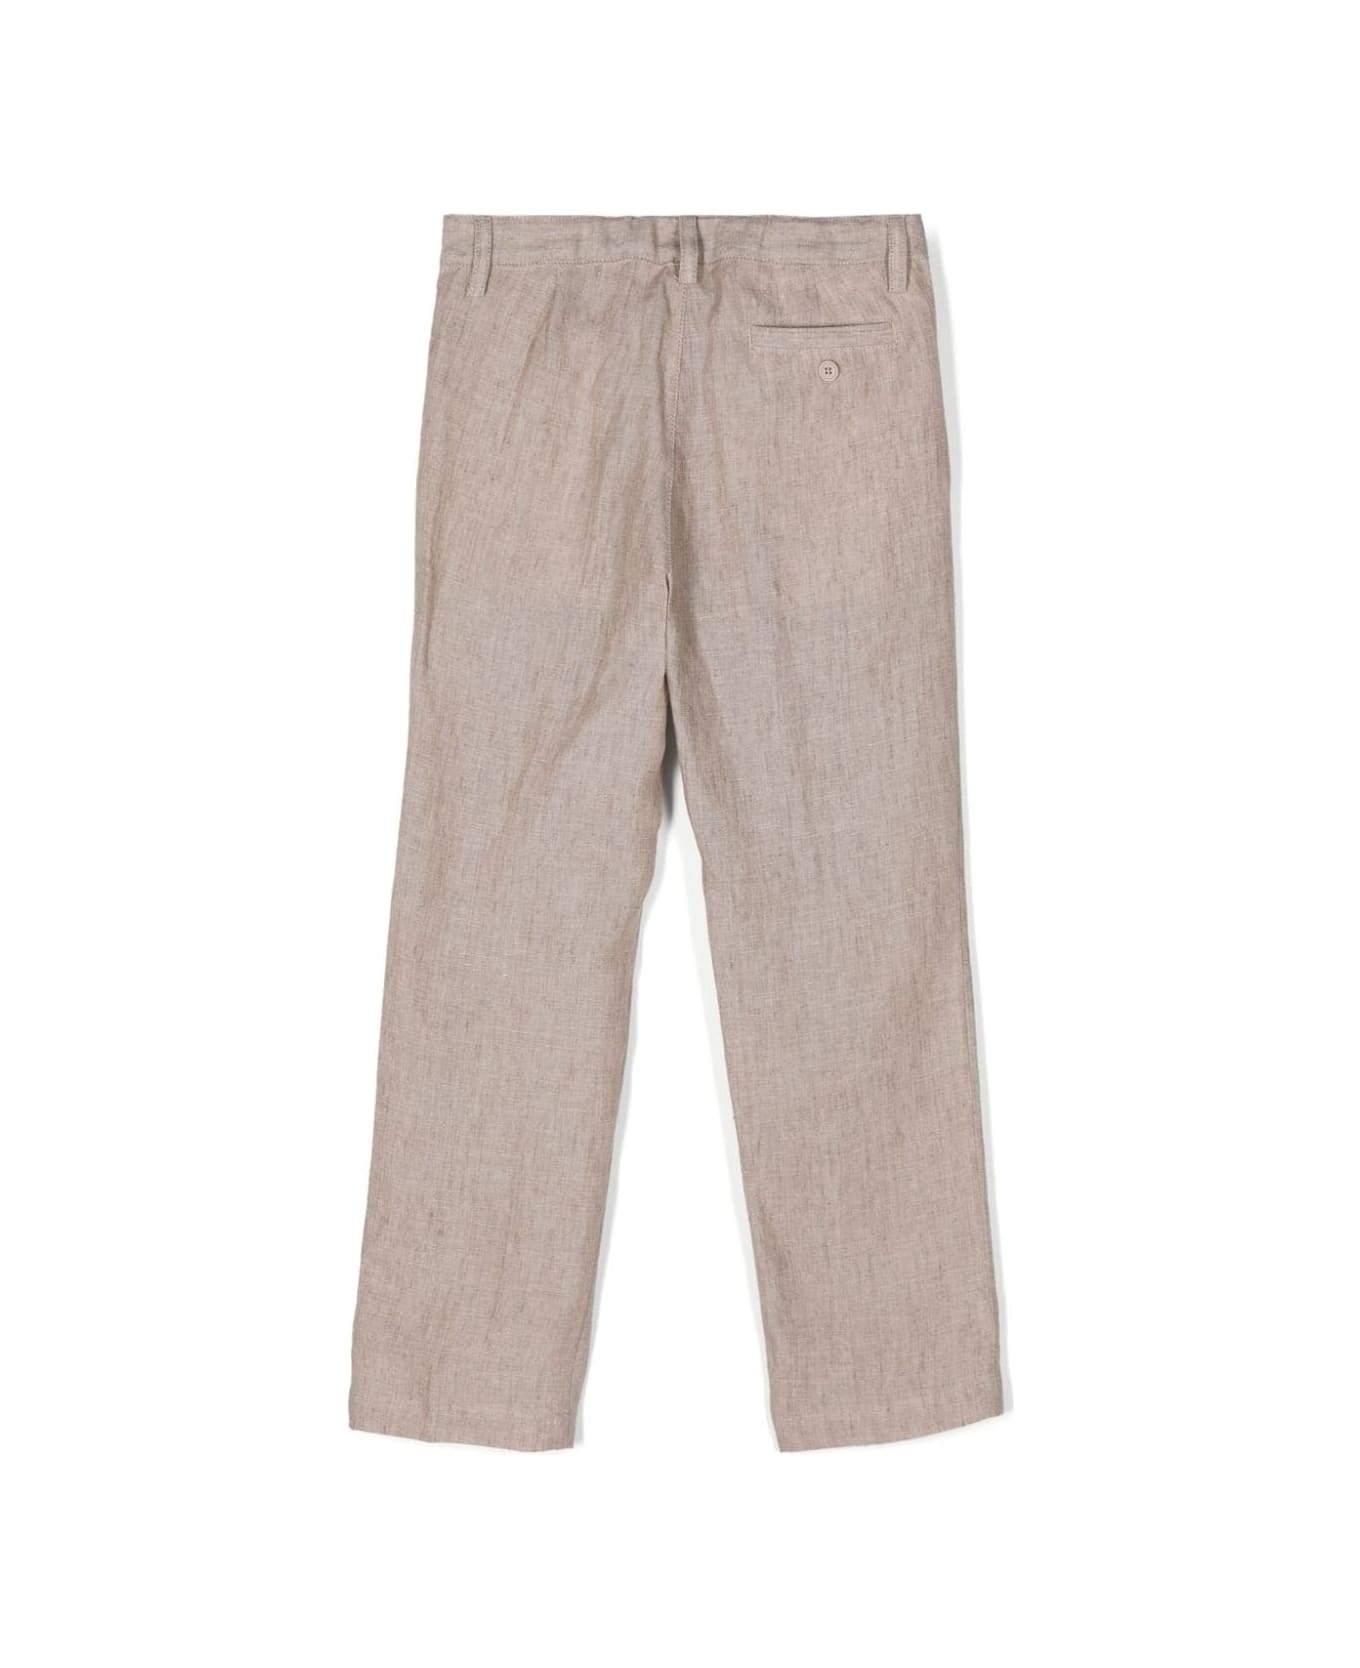 Il Gufo Classic Trousers In Melange Beige Linen - Brown